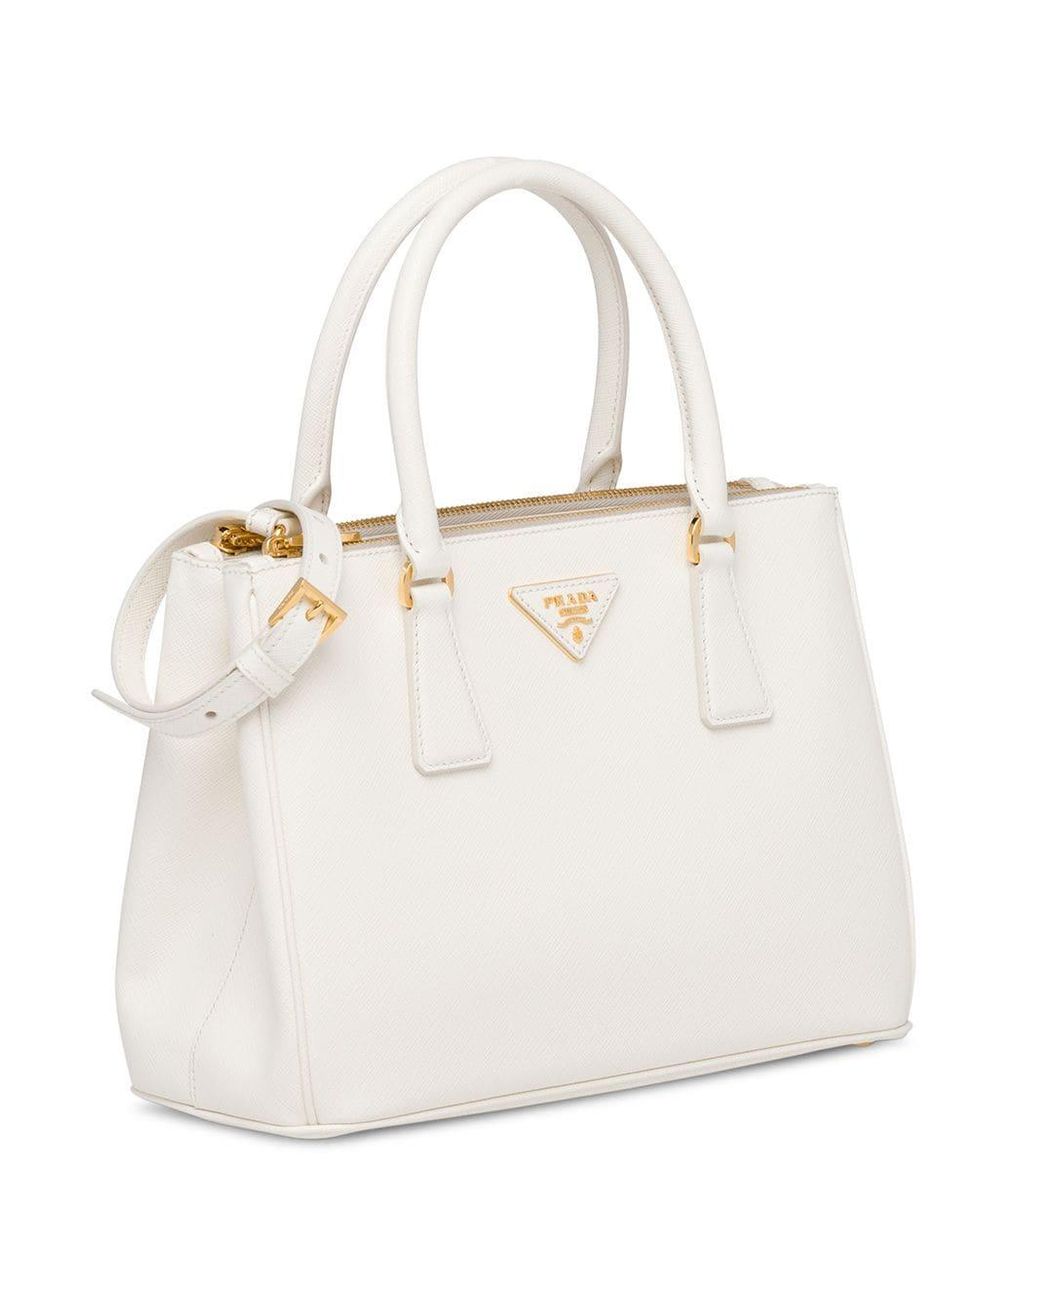 Prada Galleria Bag in White | Lyst